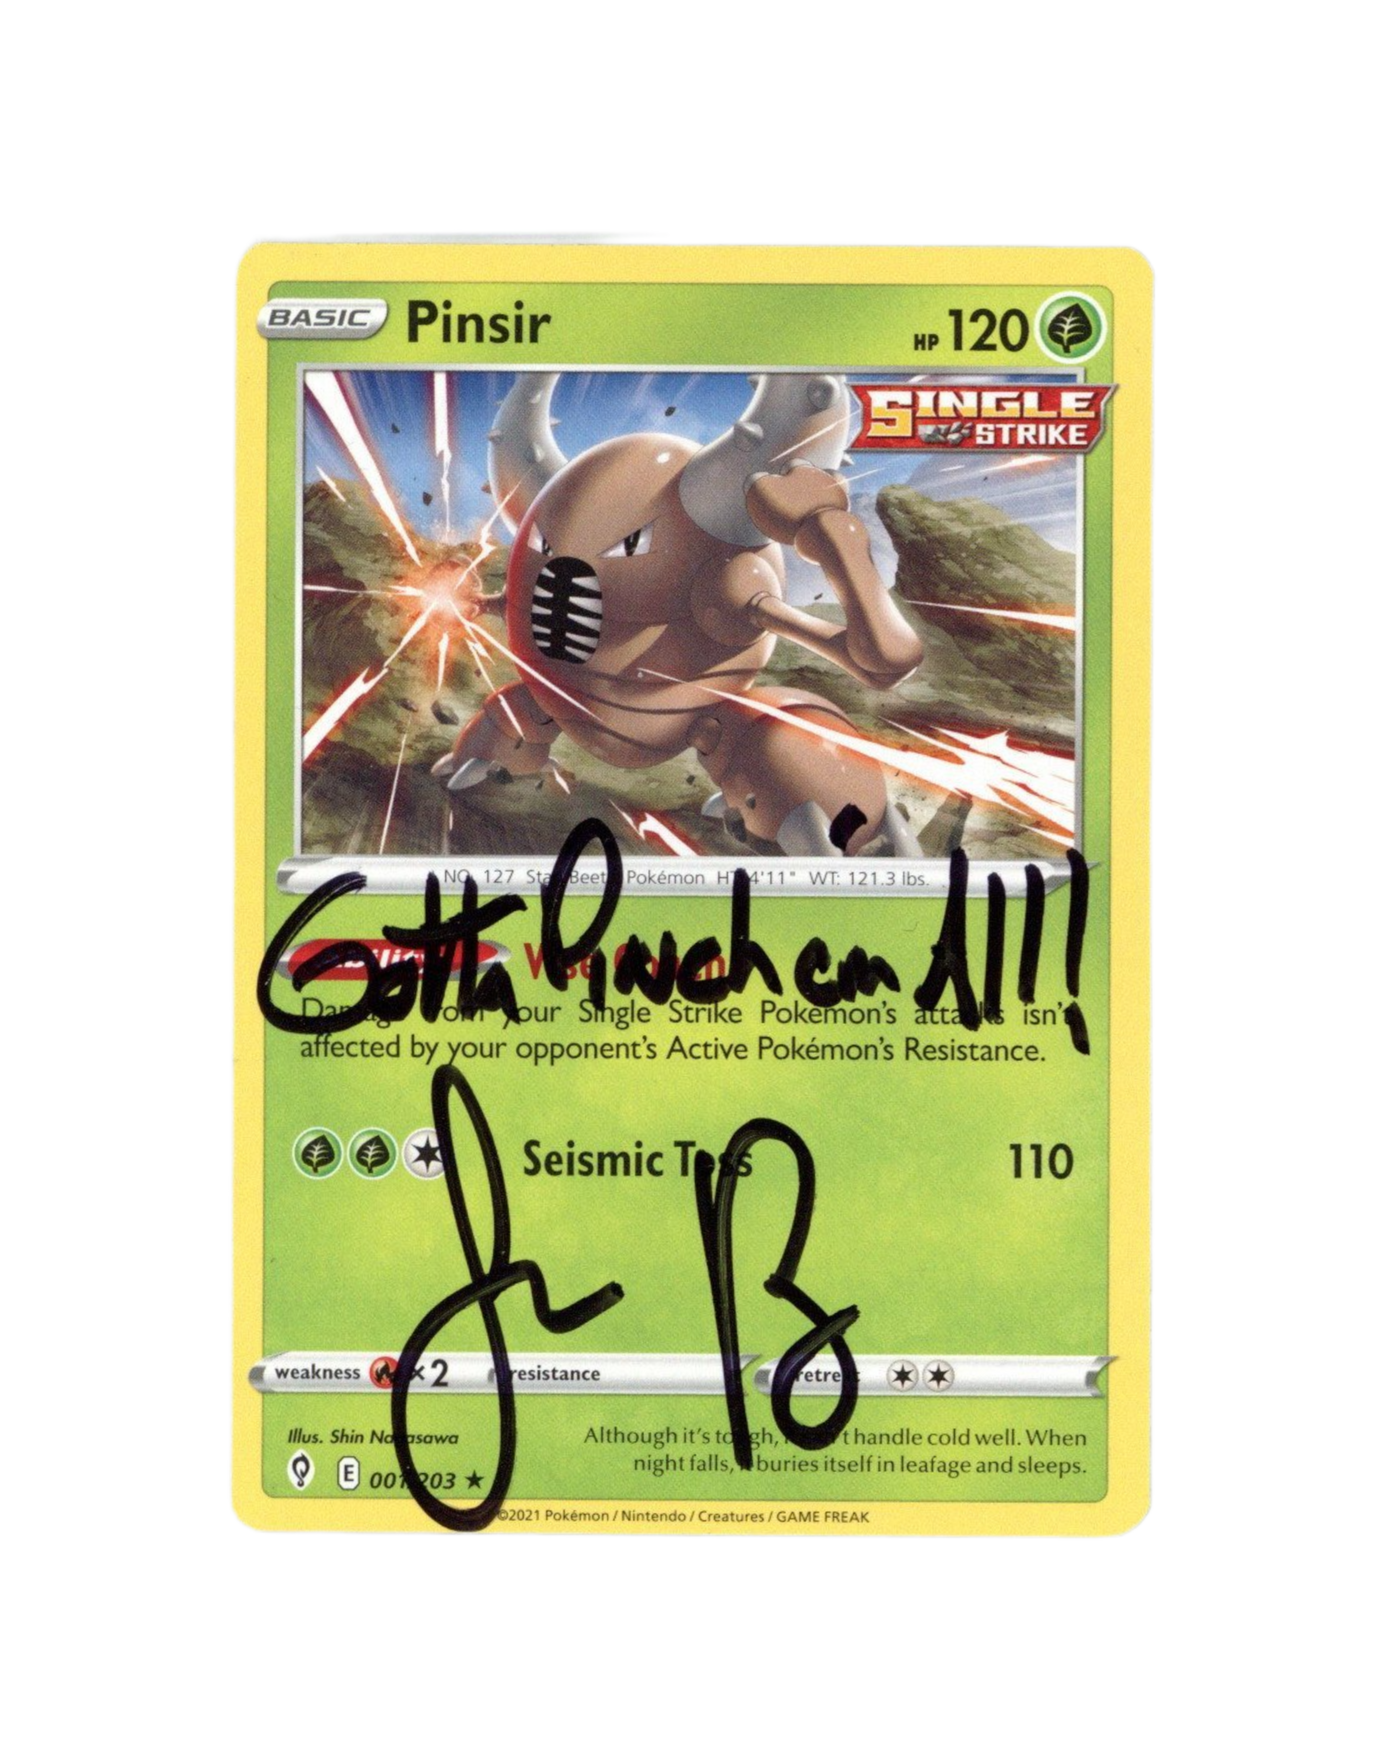 Jason Paige Signed Pokemon Pinsir Trading Card - Autographed Zobie COA